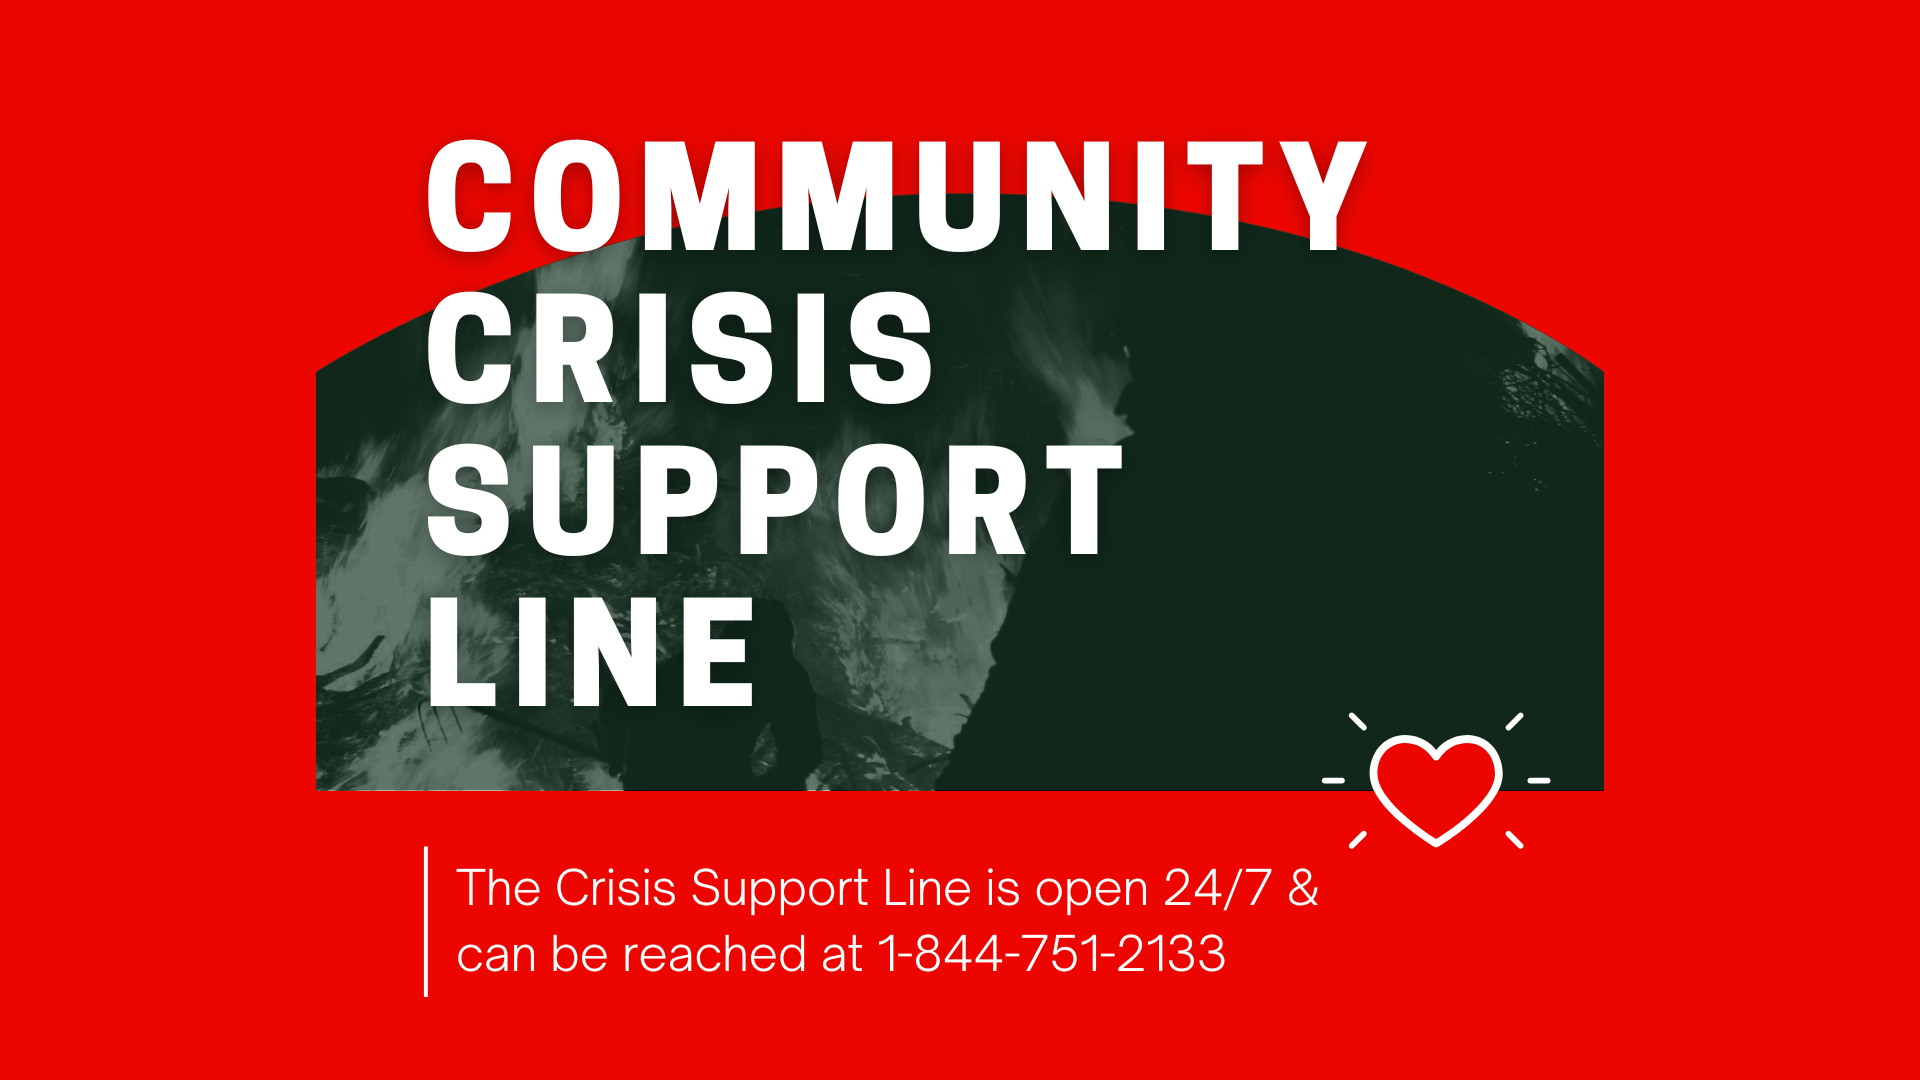 community crisis support line Presentation 169